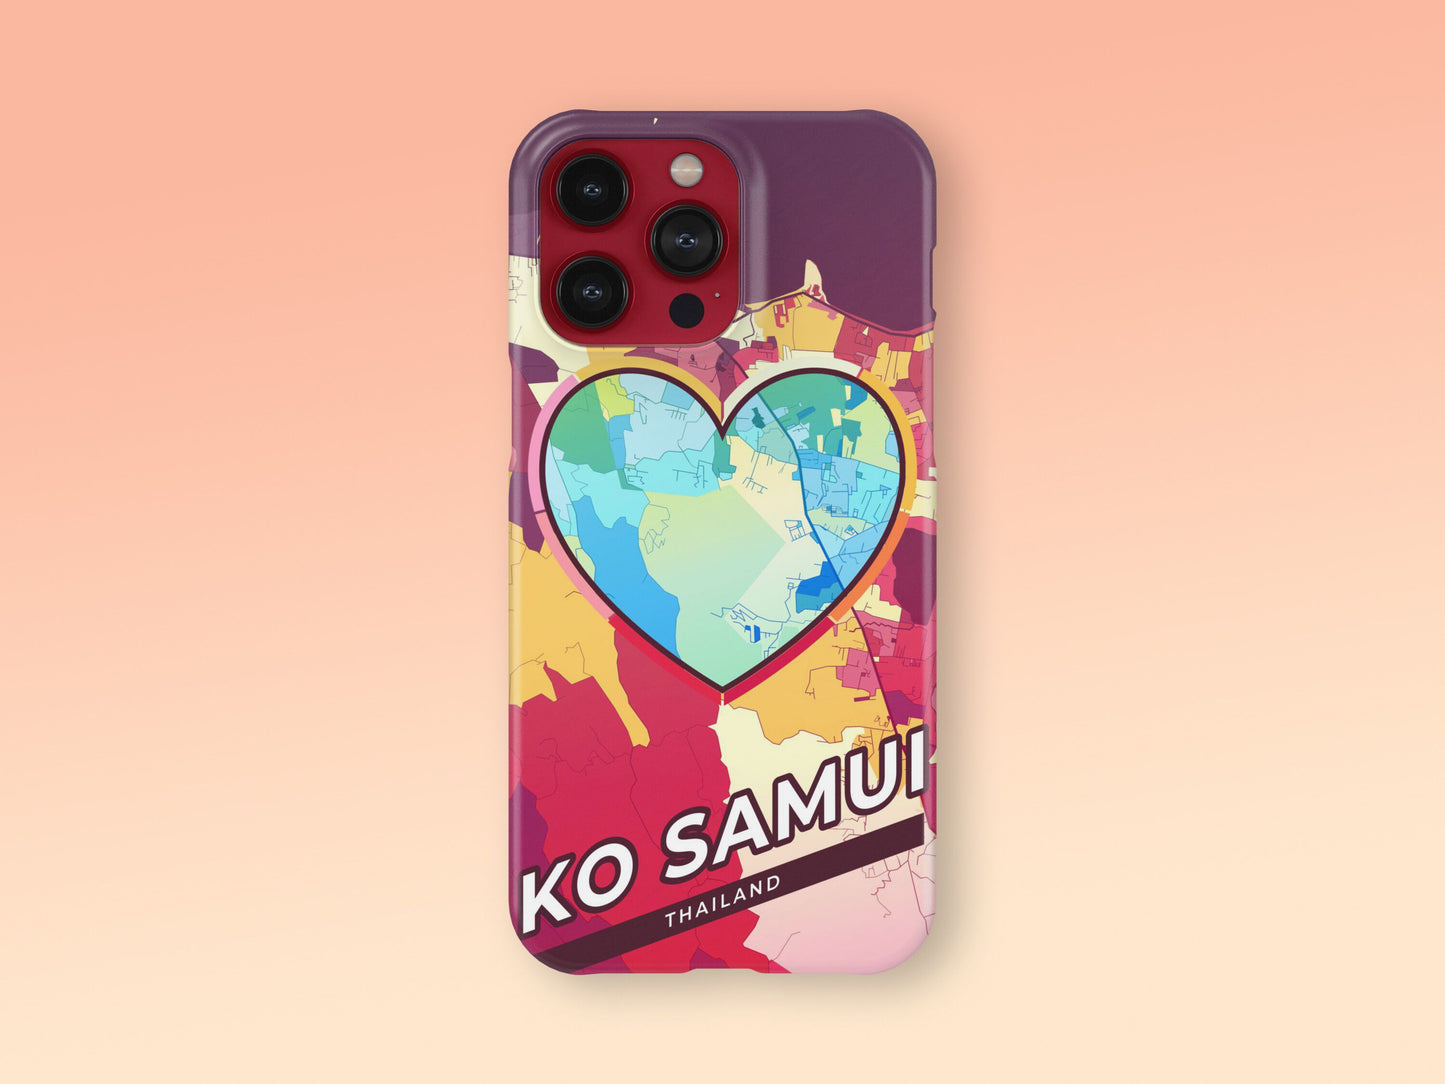 Ko Samui Thailand slim phone case with colorful icon. Birthday, wedding or housewarming gift. Couple match cases. 2